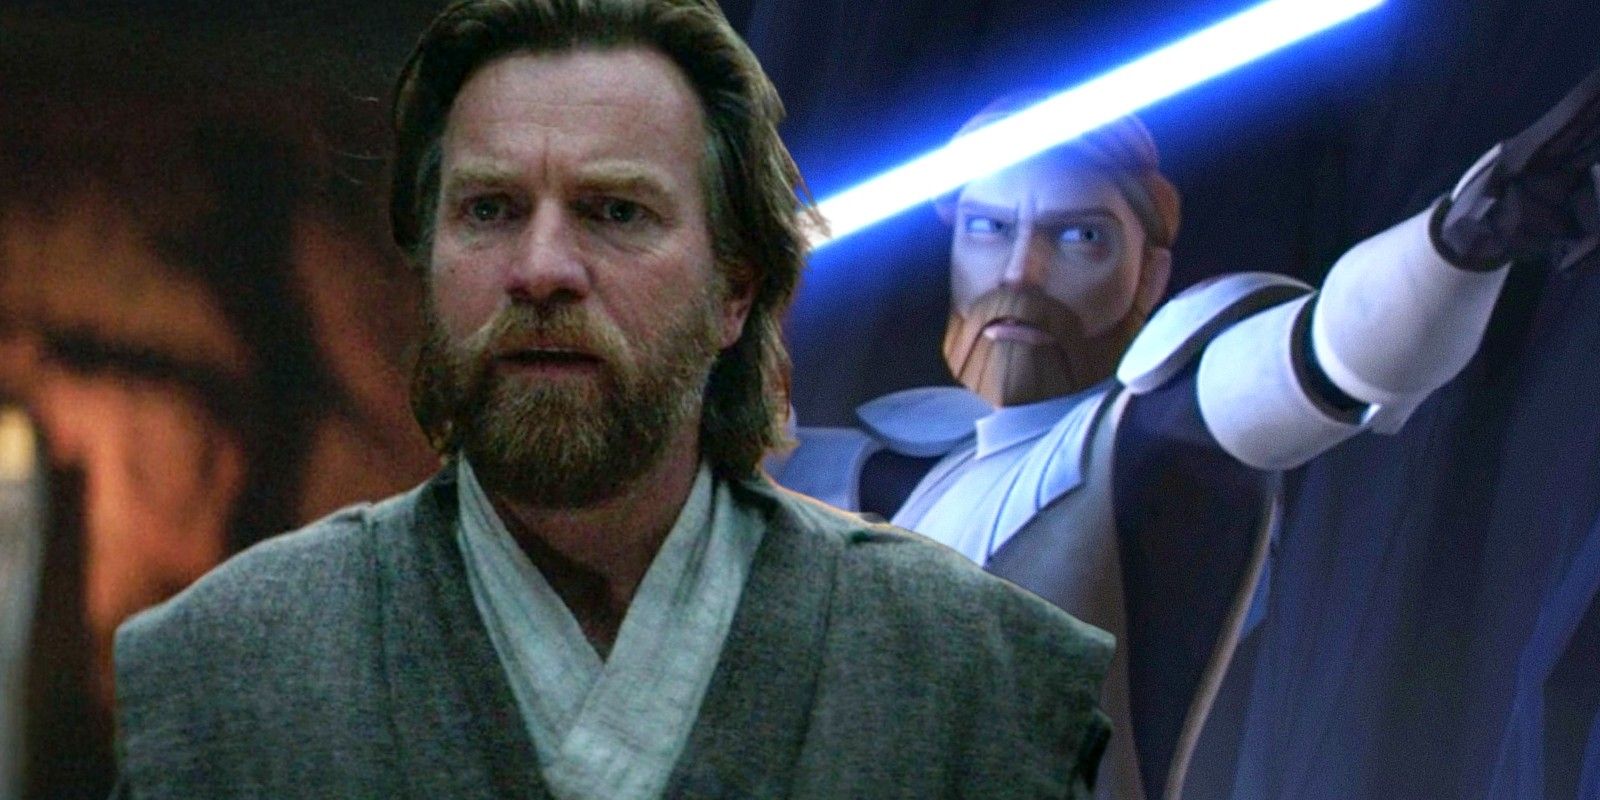 Ewan McGregor as Obi-Wan Kenobi with General Kenobi from The Clone Wars